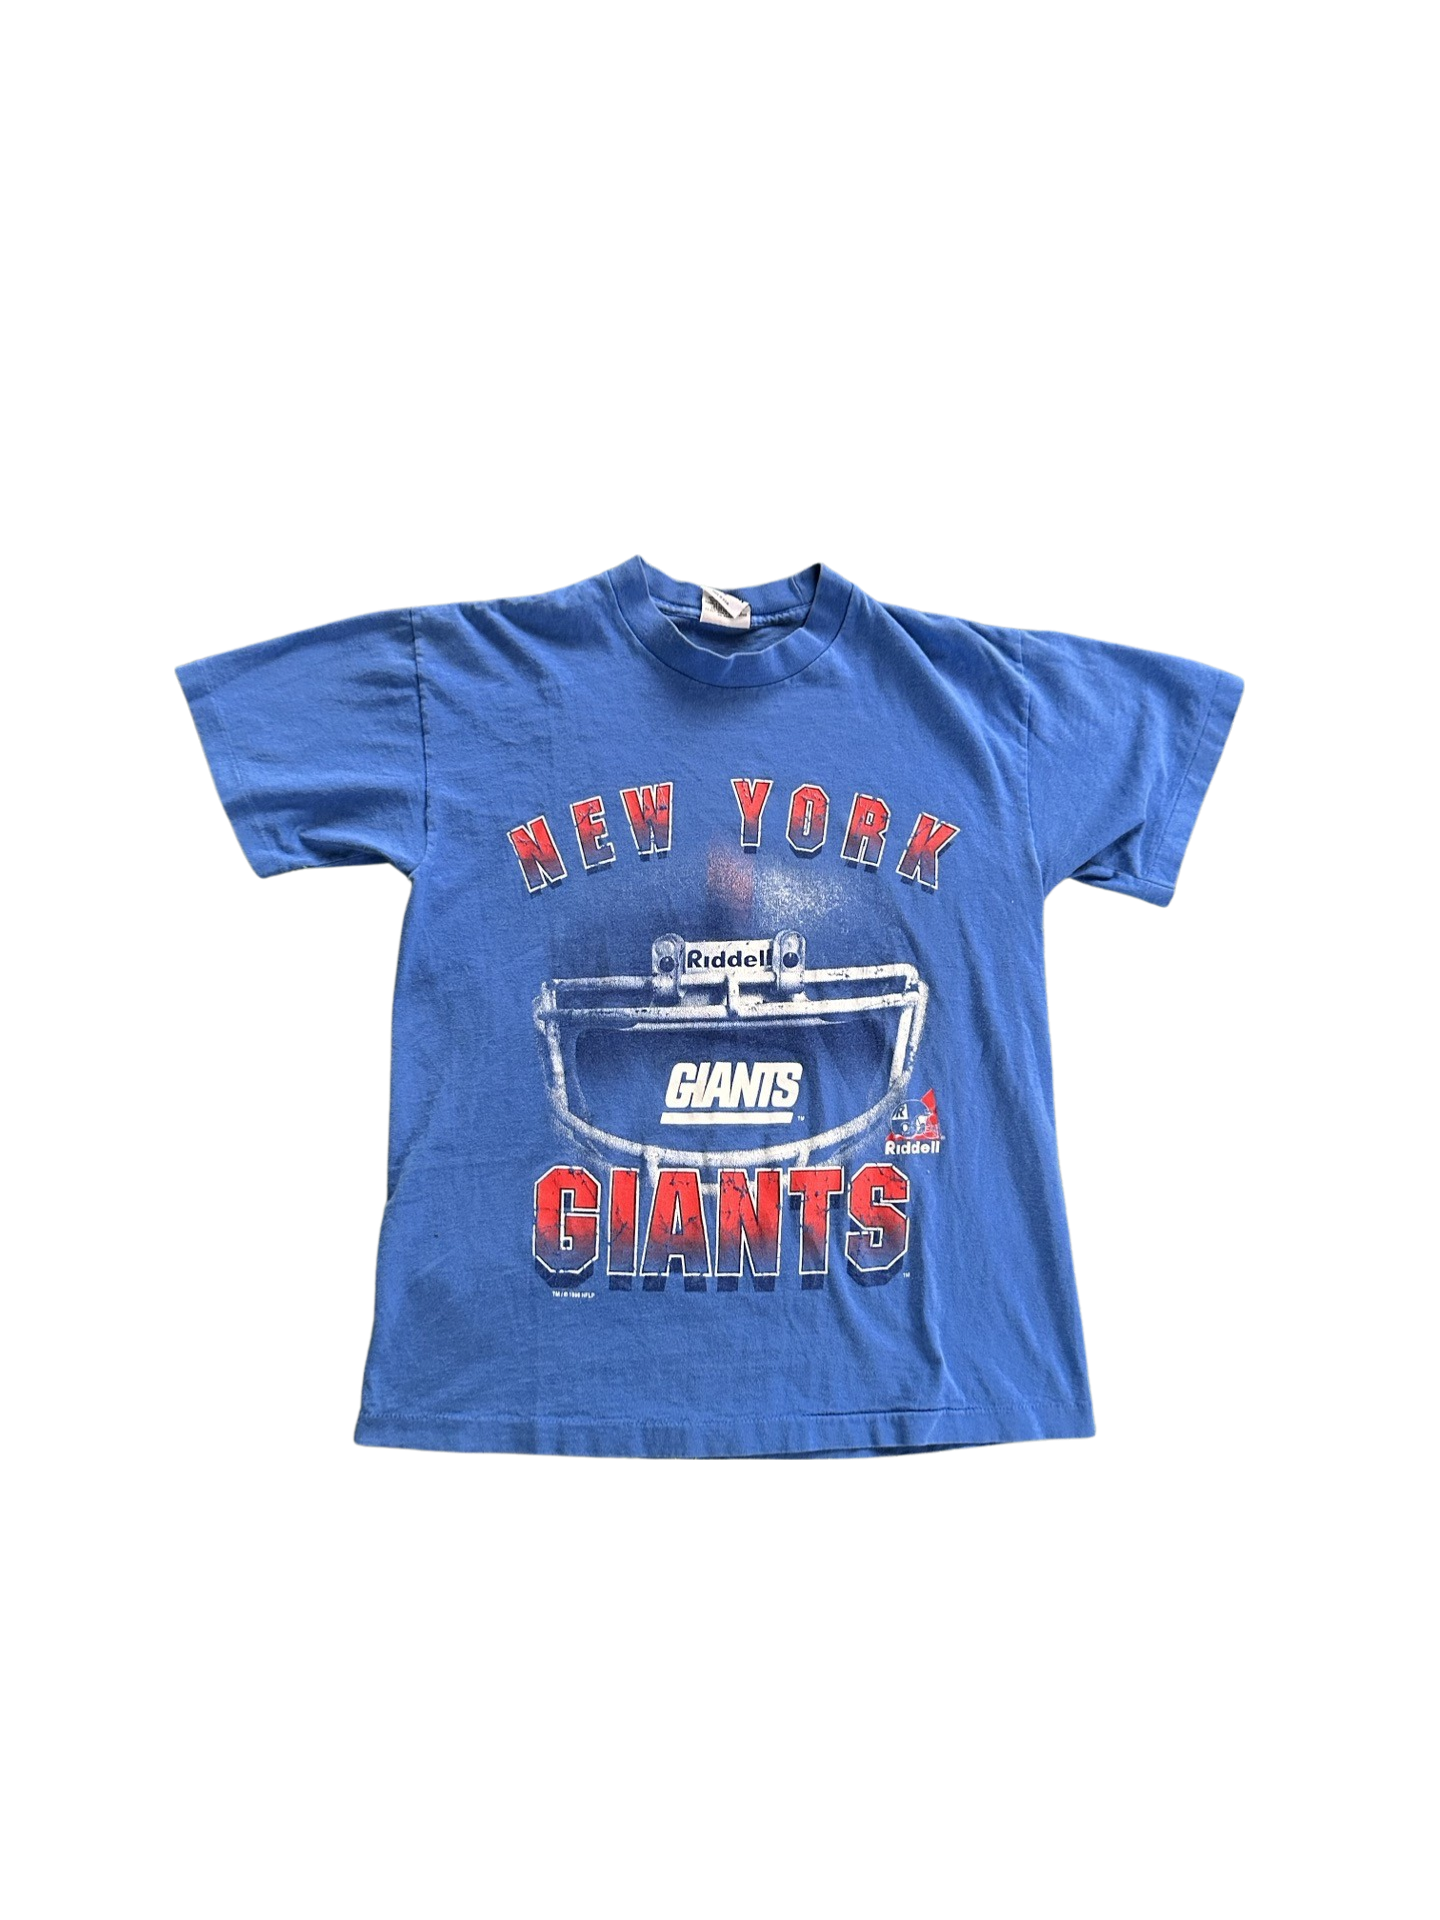 Vintage New York Giants T-shirt